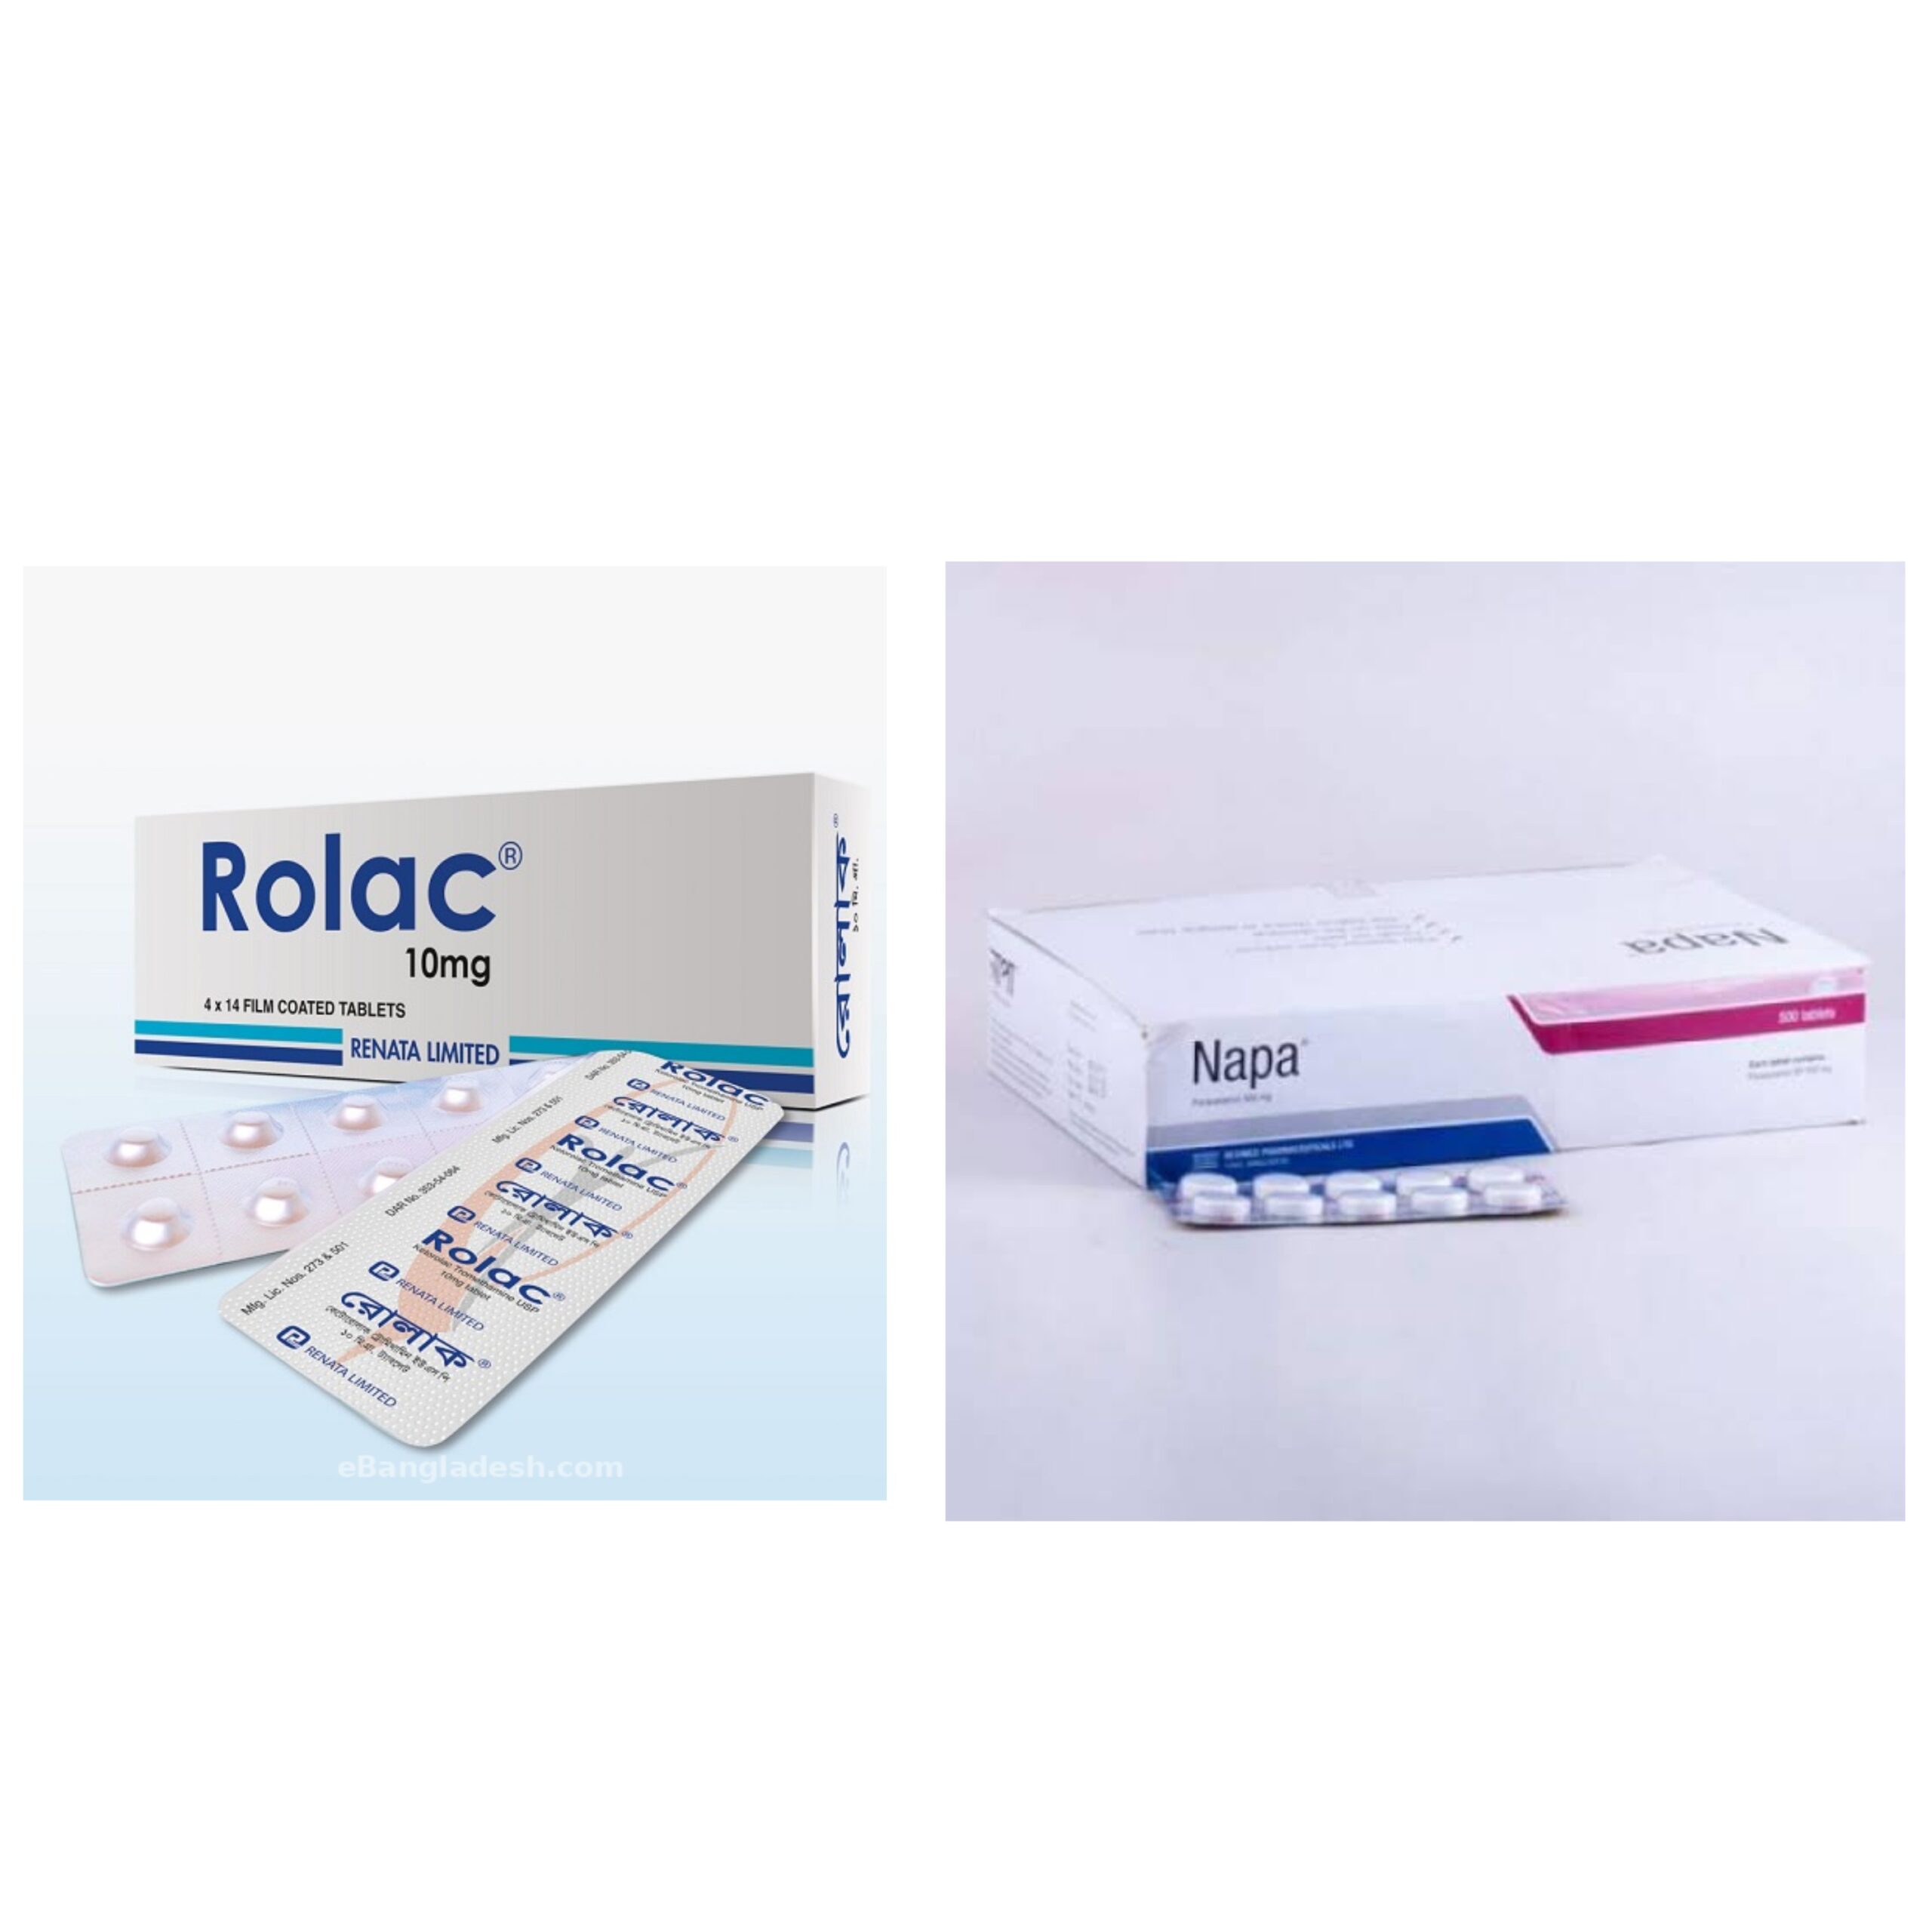 Post operative pain এ Rolac দিবেন নাকি Paracetamol?